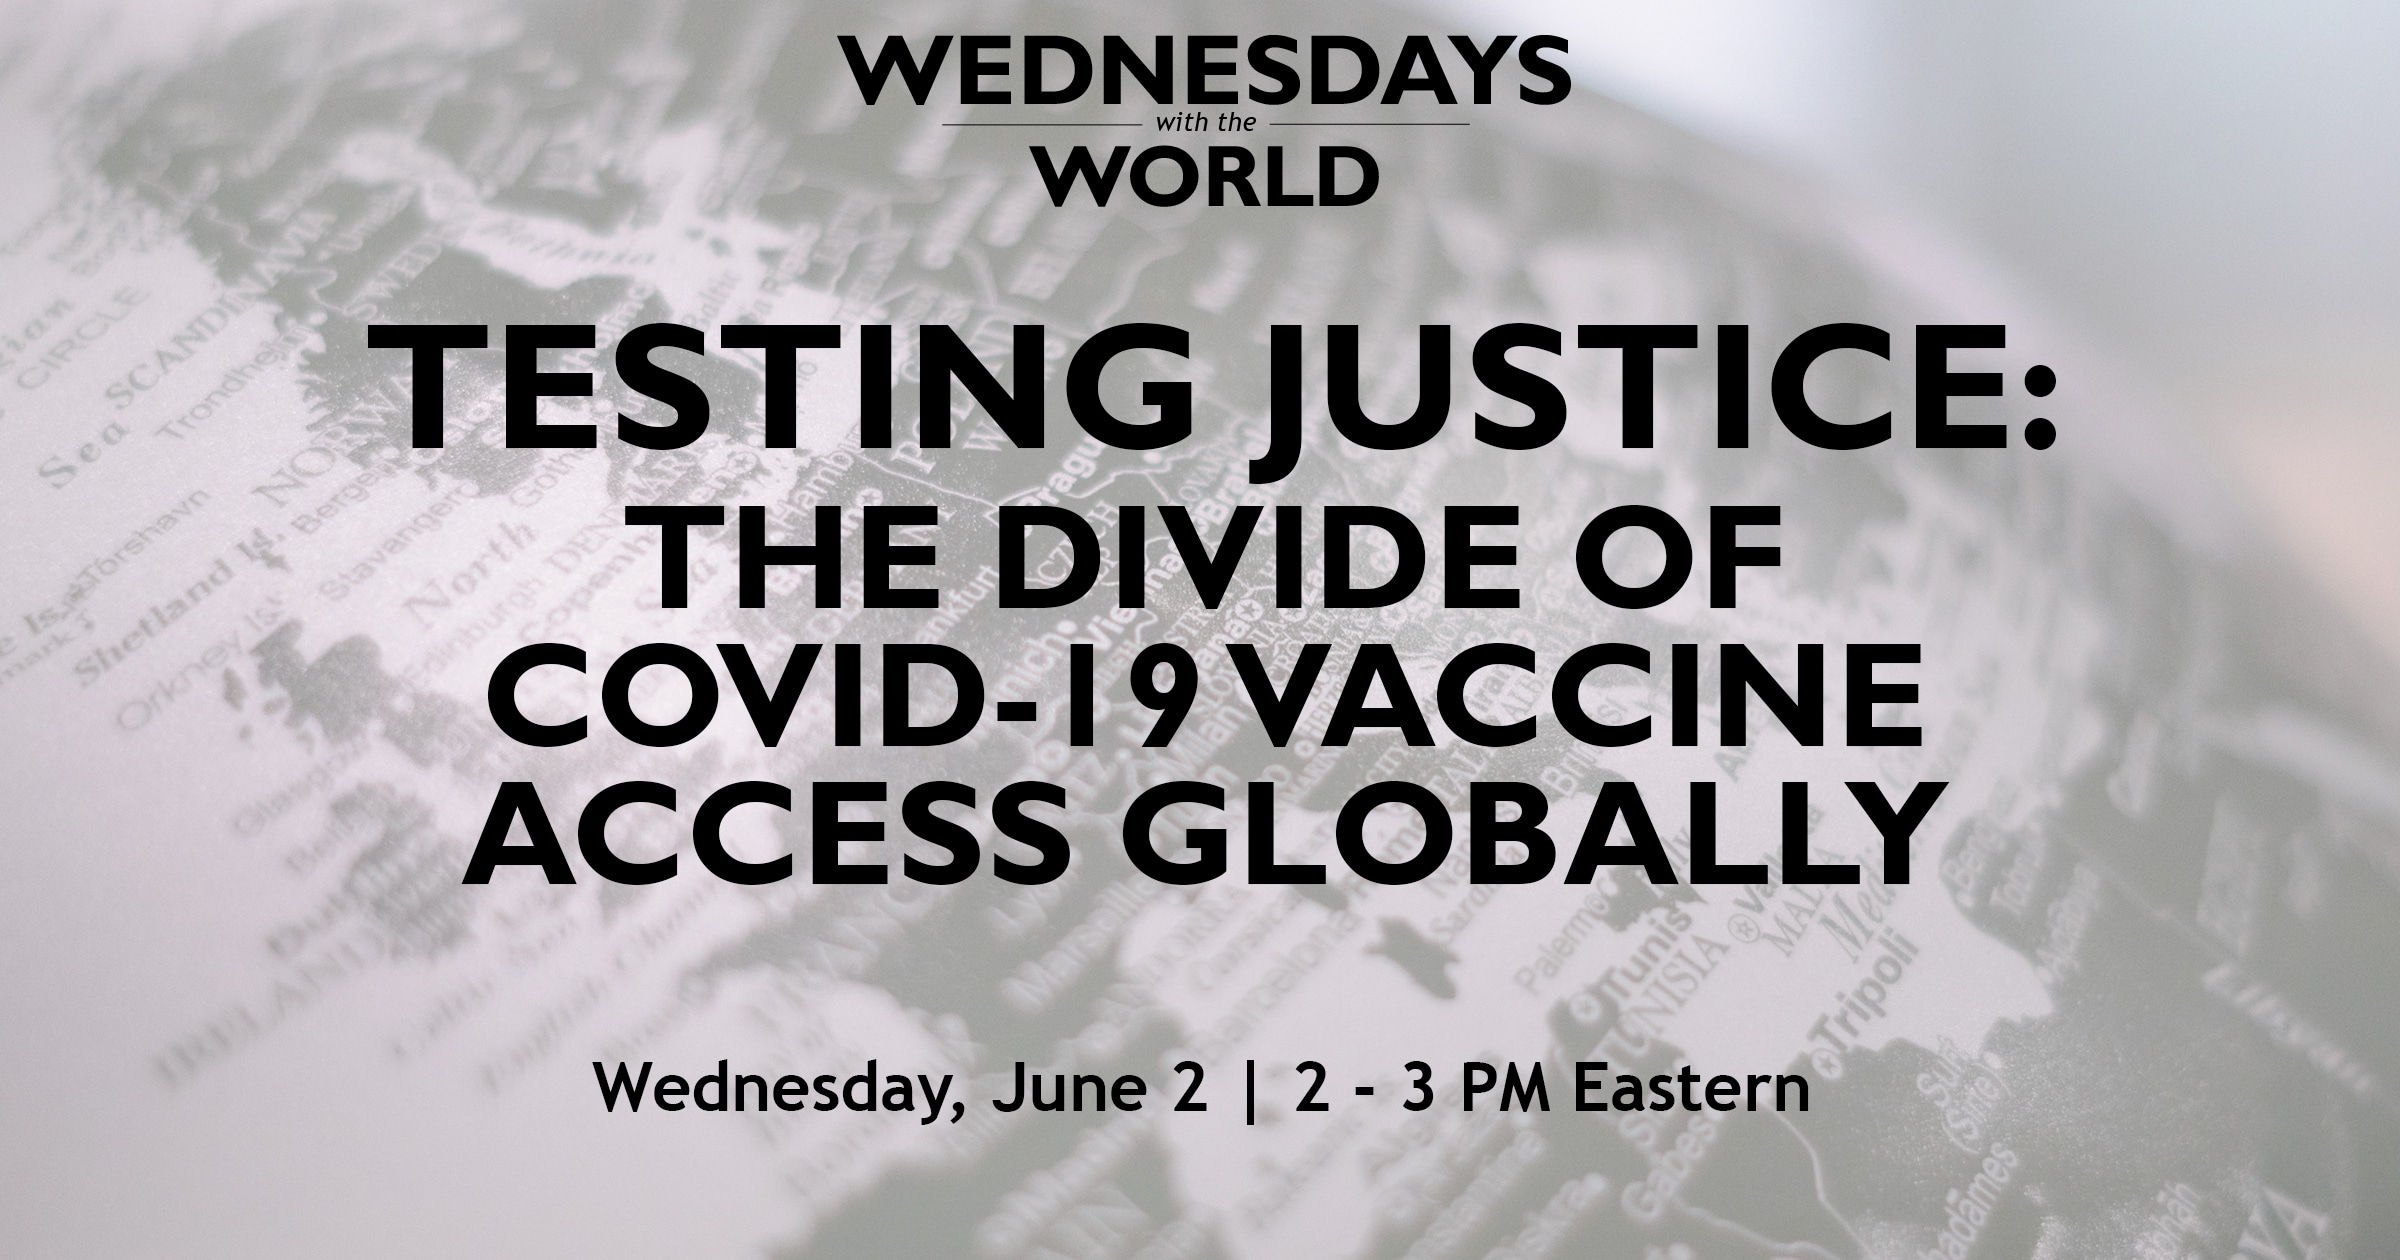 VaccineAccess-WednesdayswiththeWorld-WordPress-Promotion.jpg